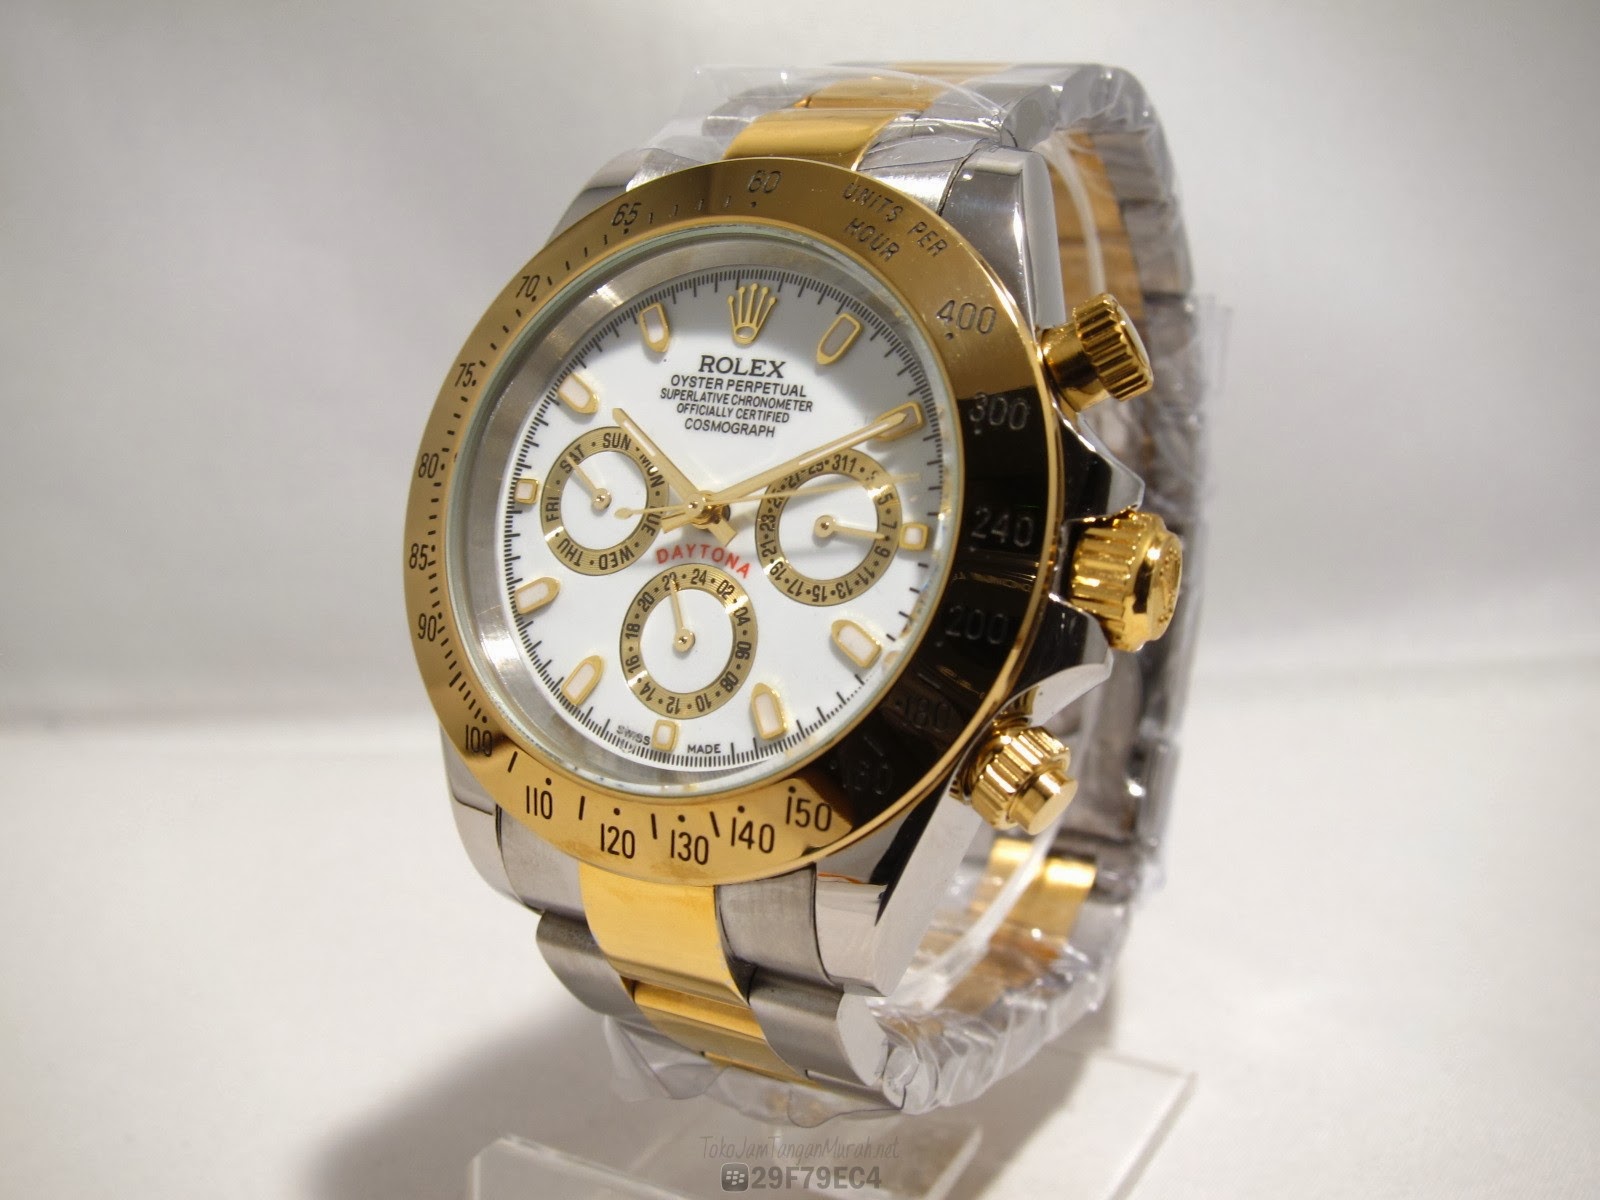 Jam Rolex - World famous watches brands in Hartford